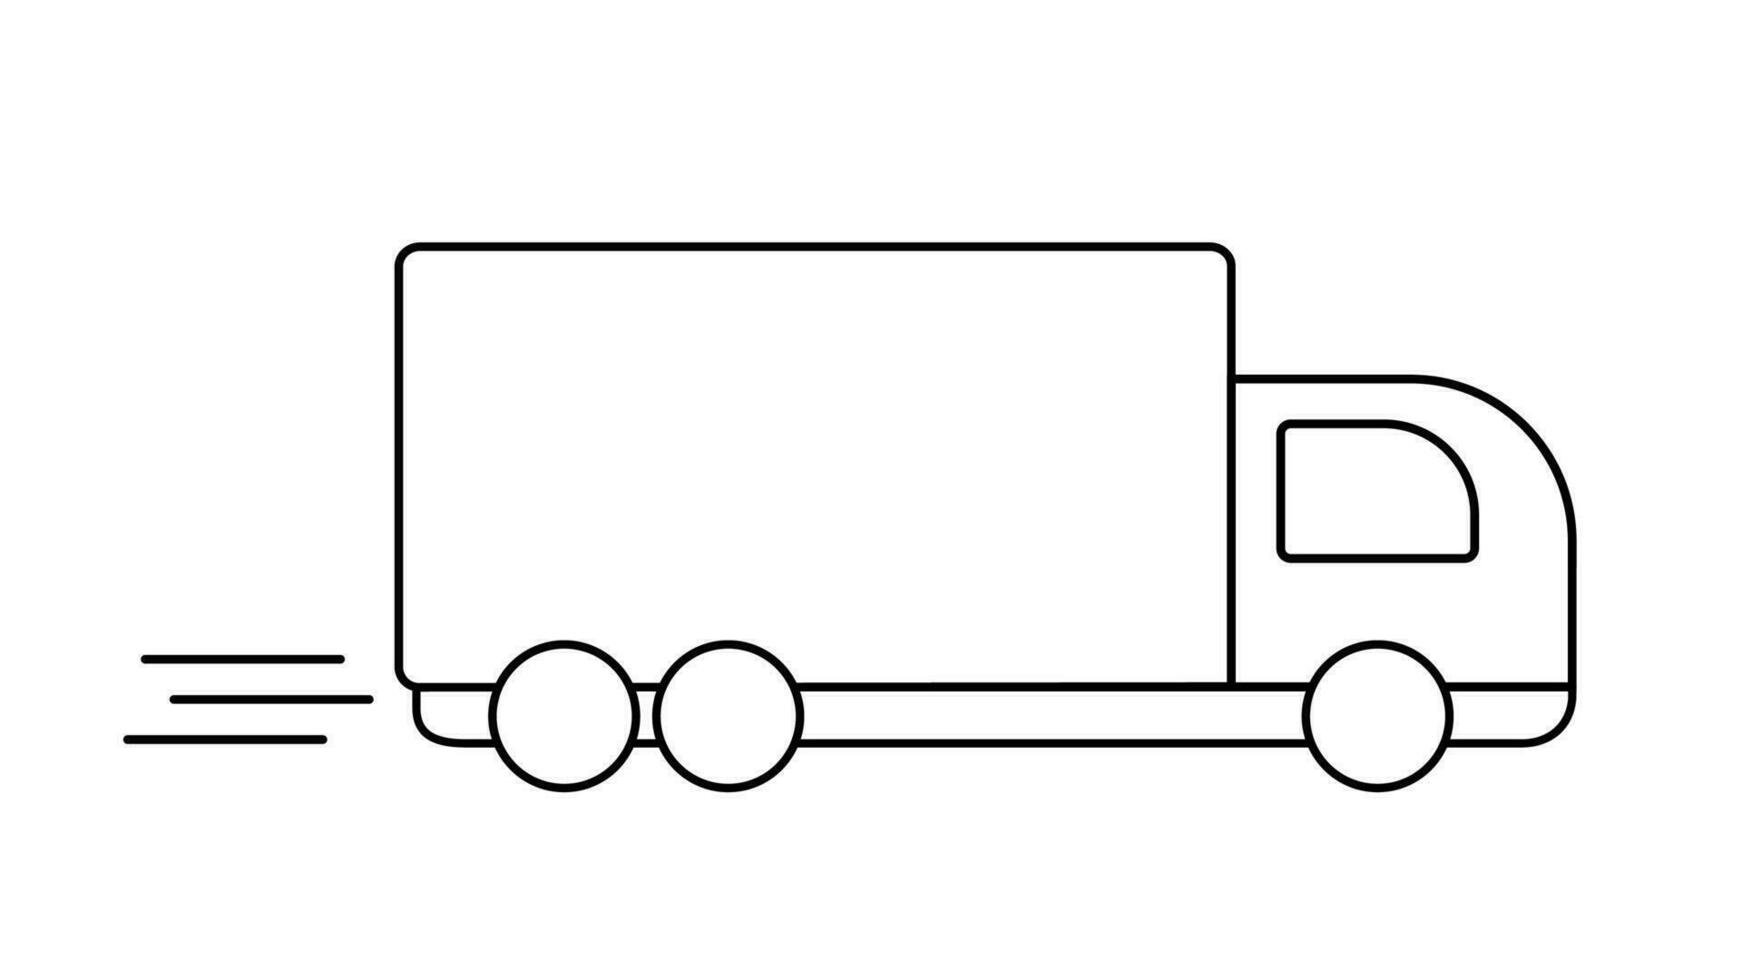 Truck outline on white background vector